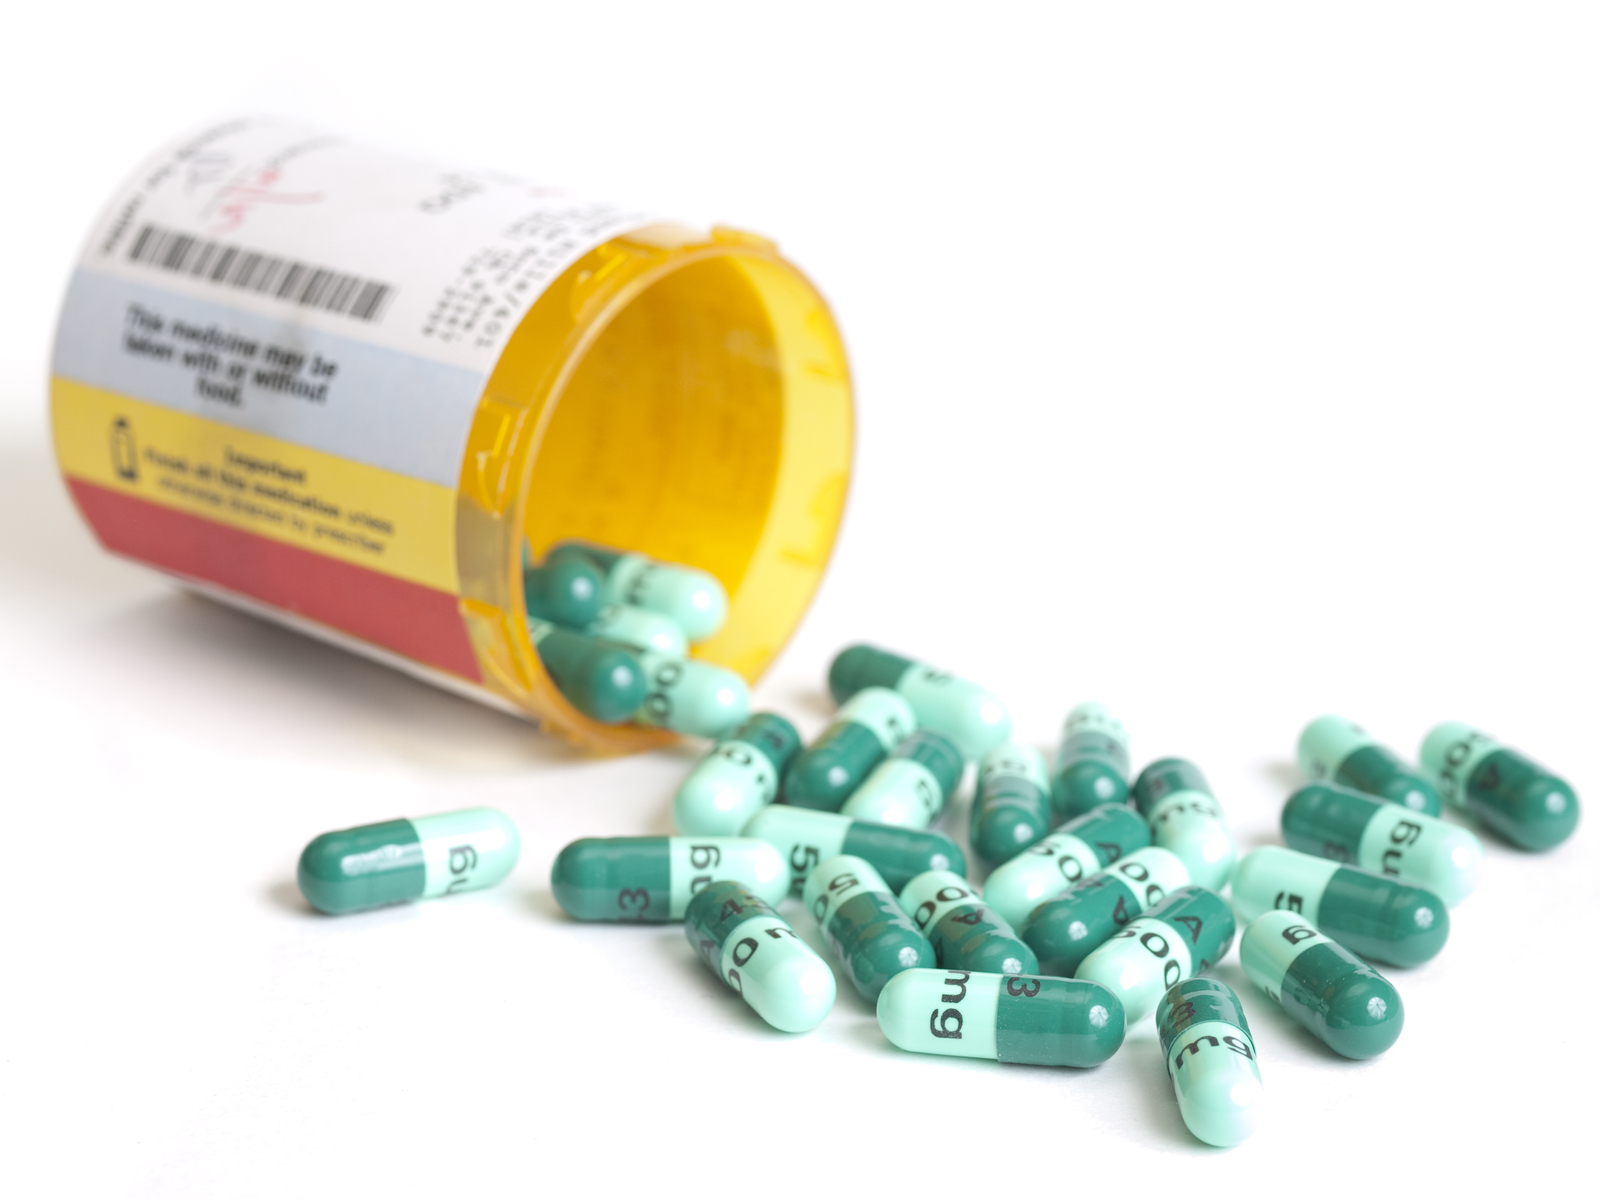 Writ seeks ban on selling antibiotics without prescription